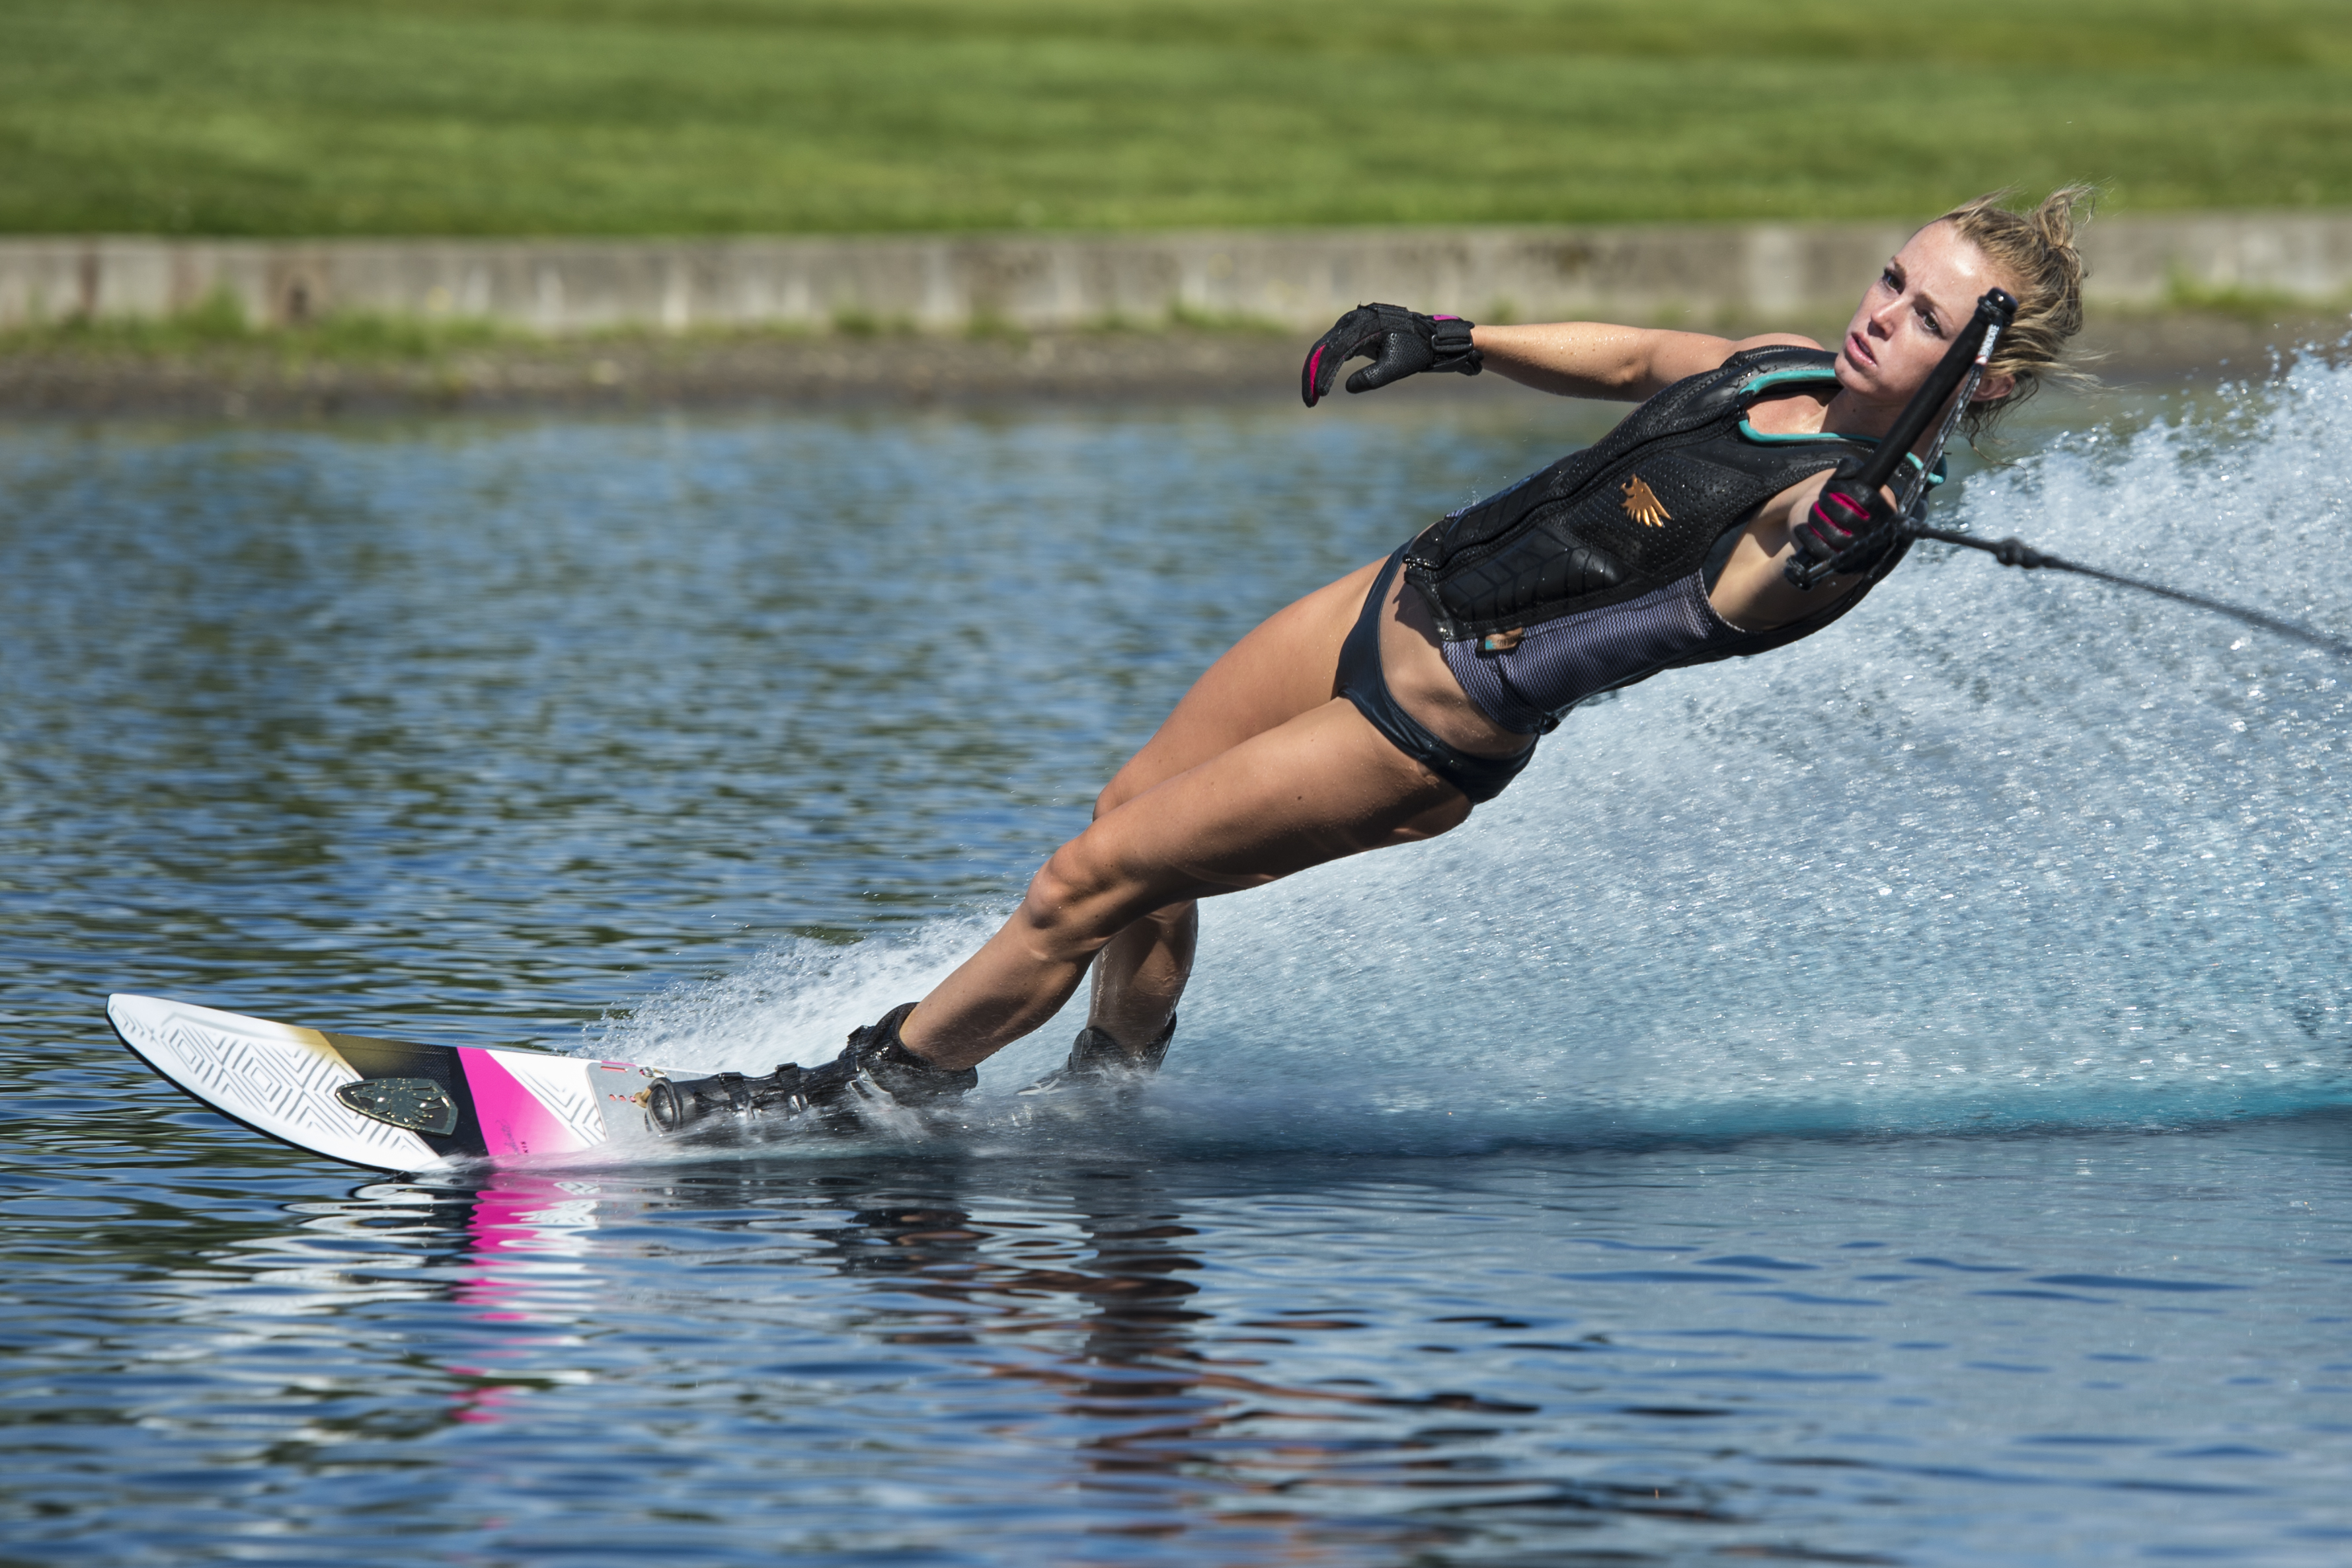 Water Skis - Water Skiing Equipment - HO Sports